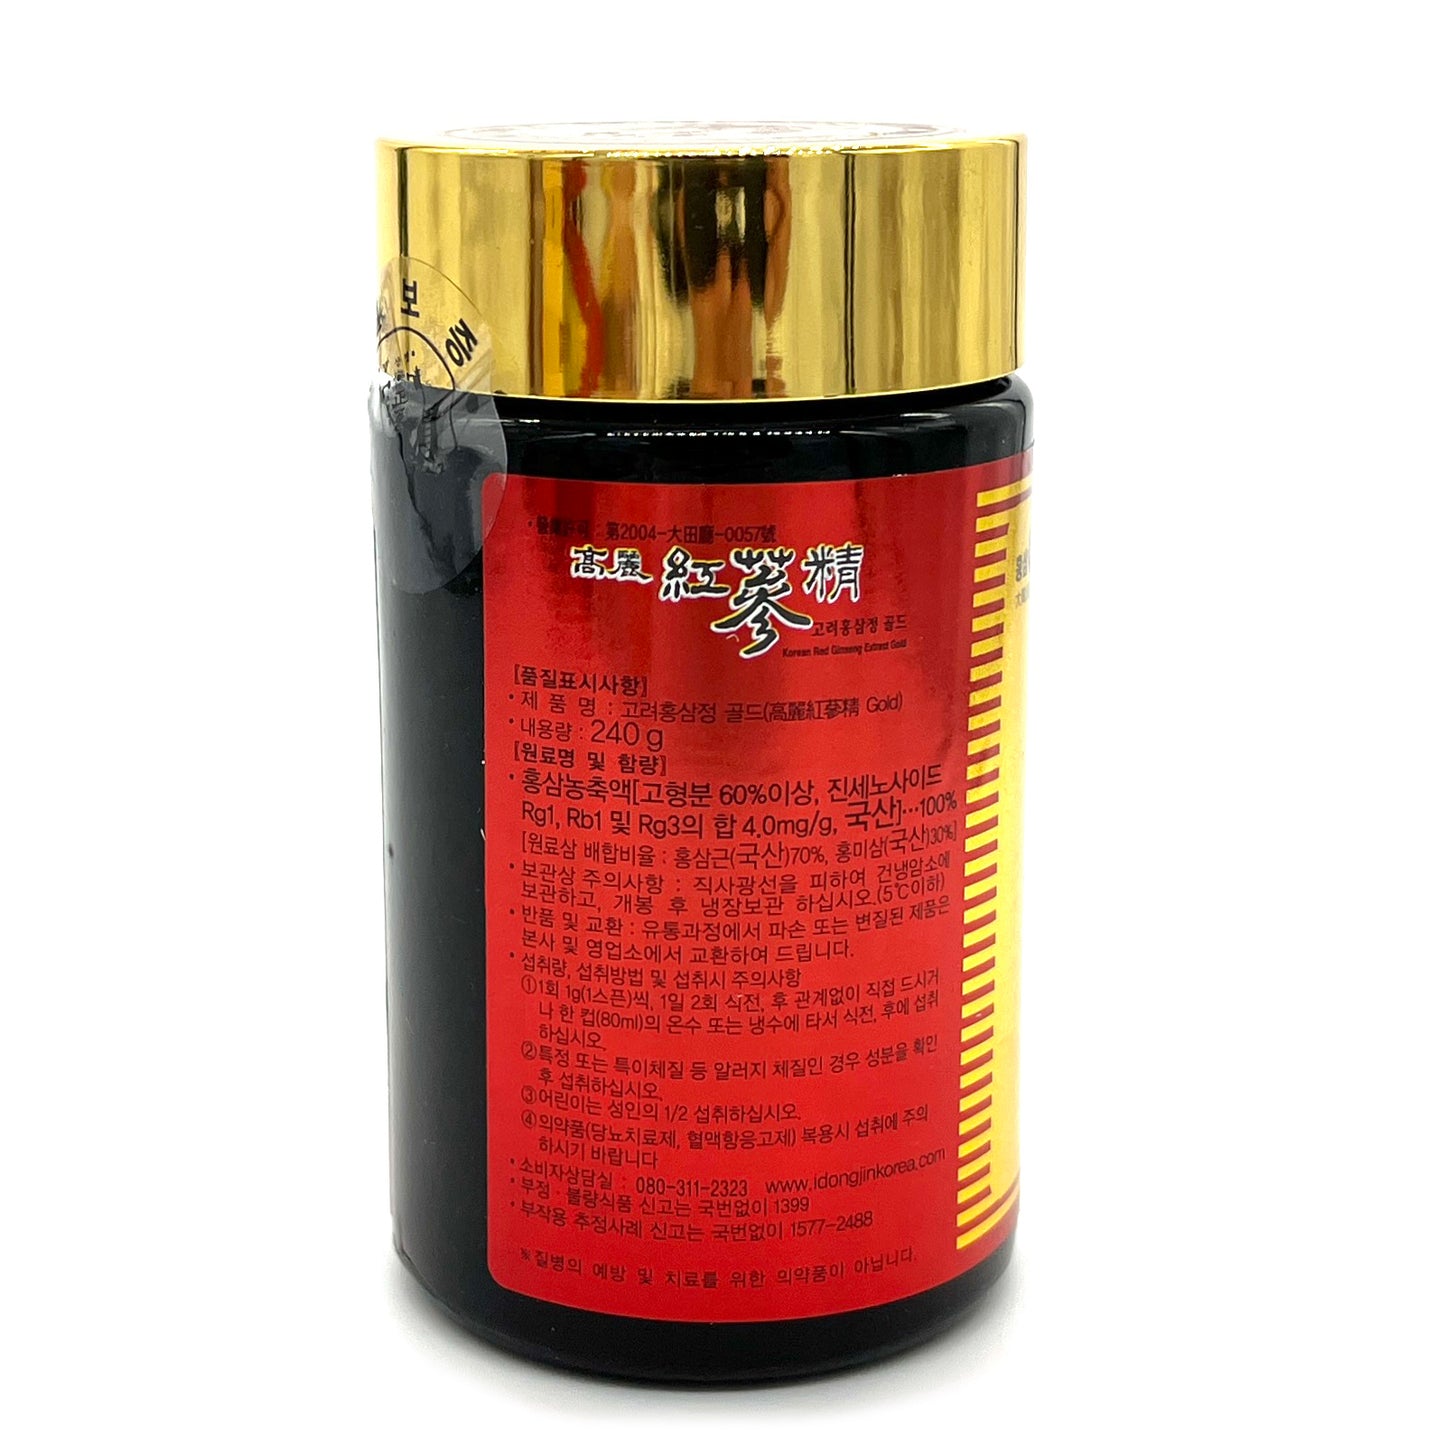 [Dongjin] Korea Red Ginseng Jung Gold Extract (240g)